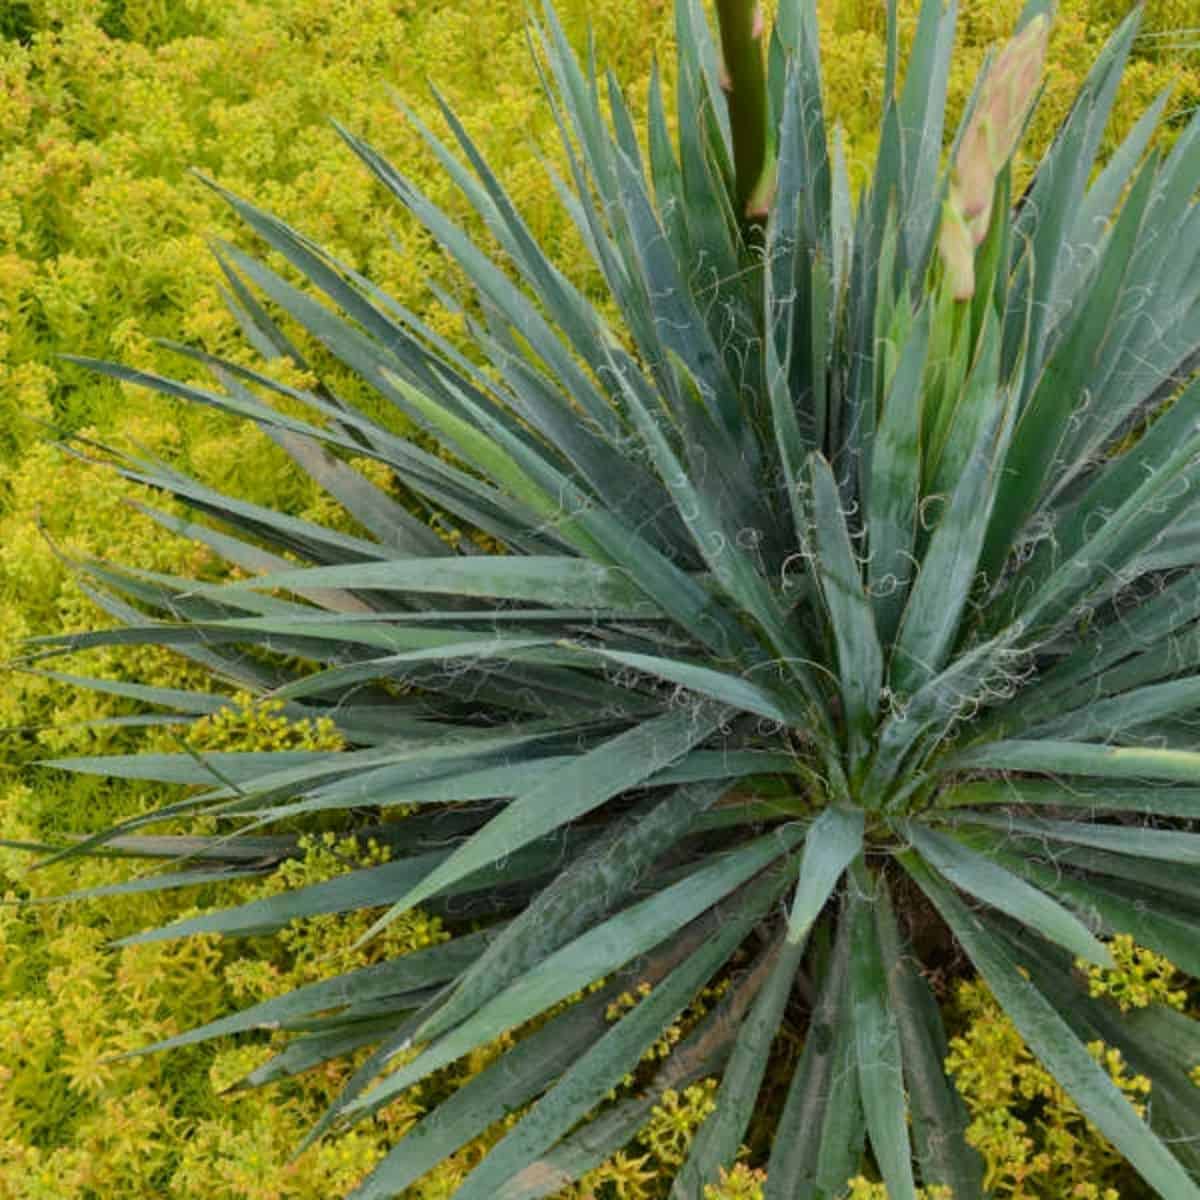 Yucca filamentosa ‘Excalibur’ grows outdoor.